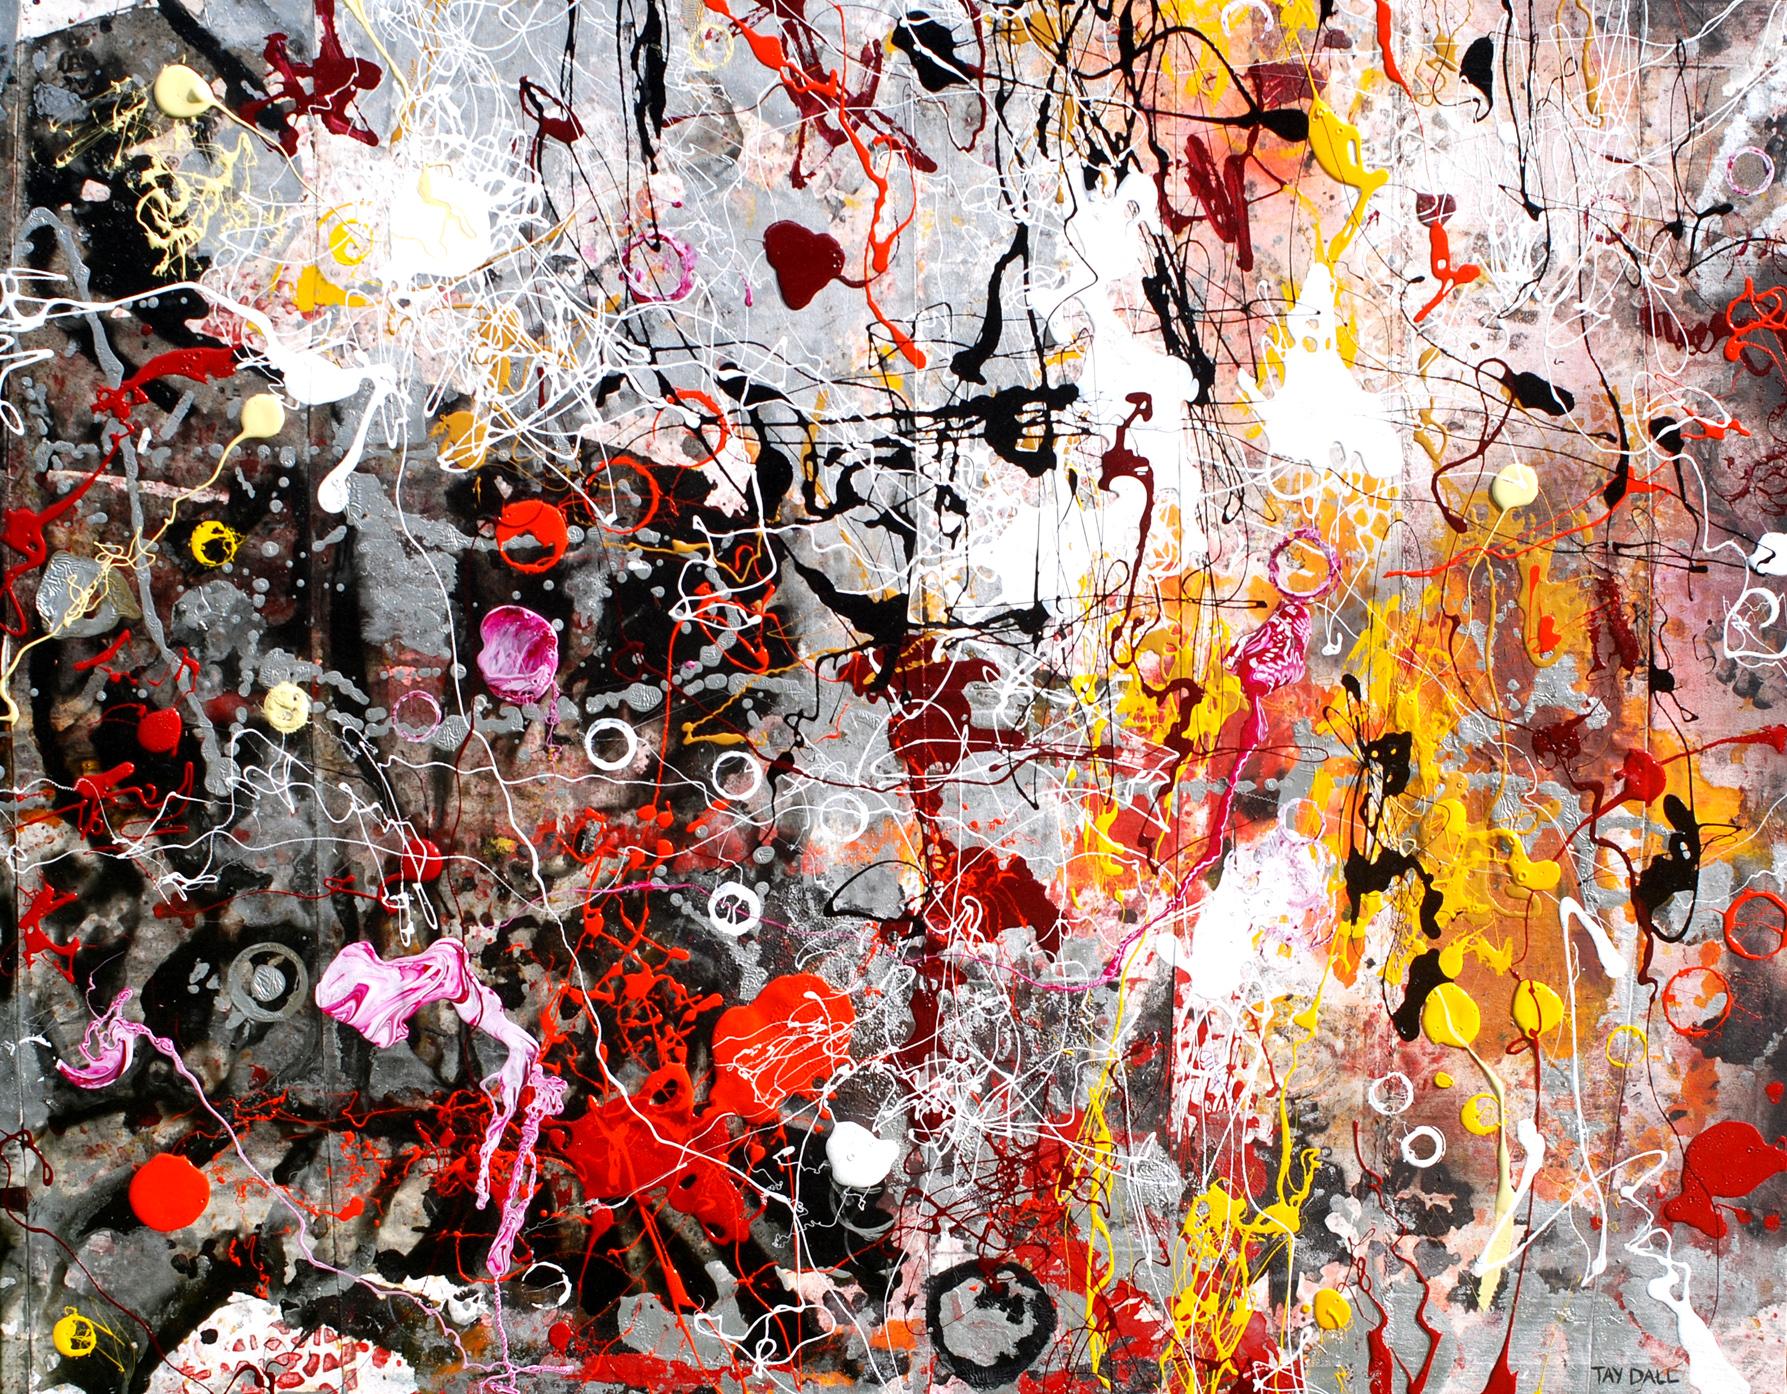 Large Splattered Abstract Painting "Slick Floor Series 1"